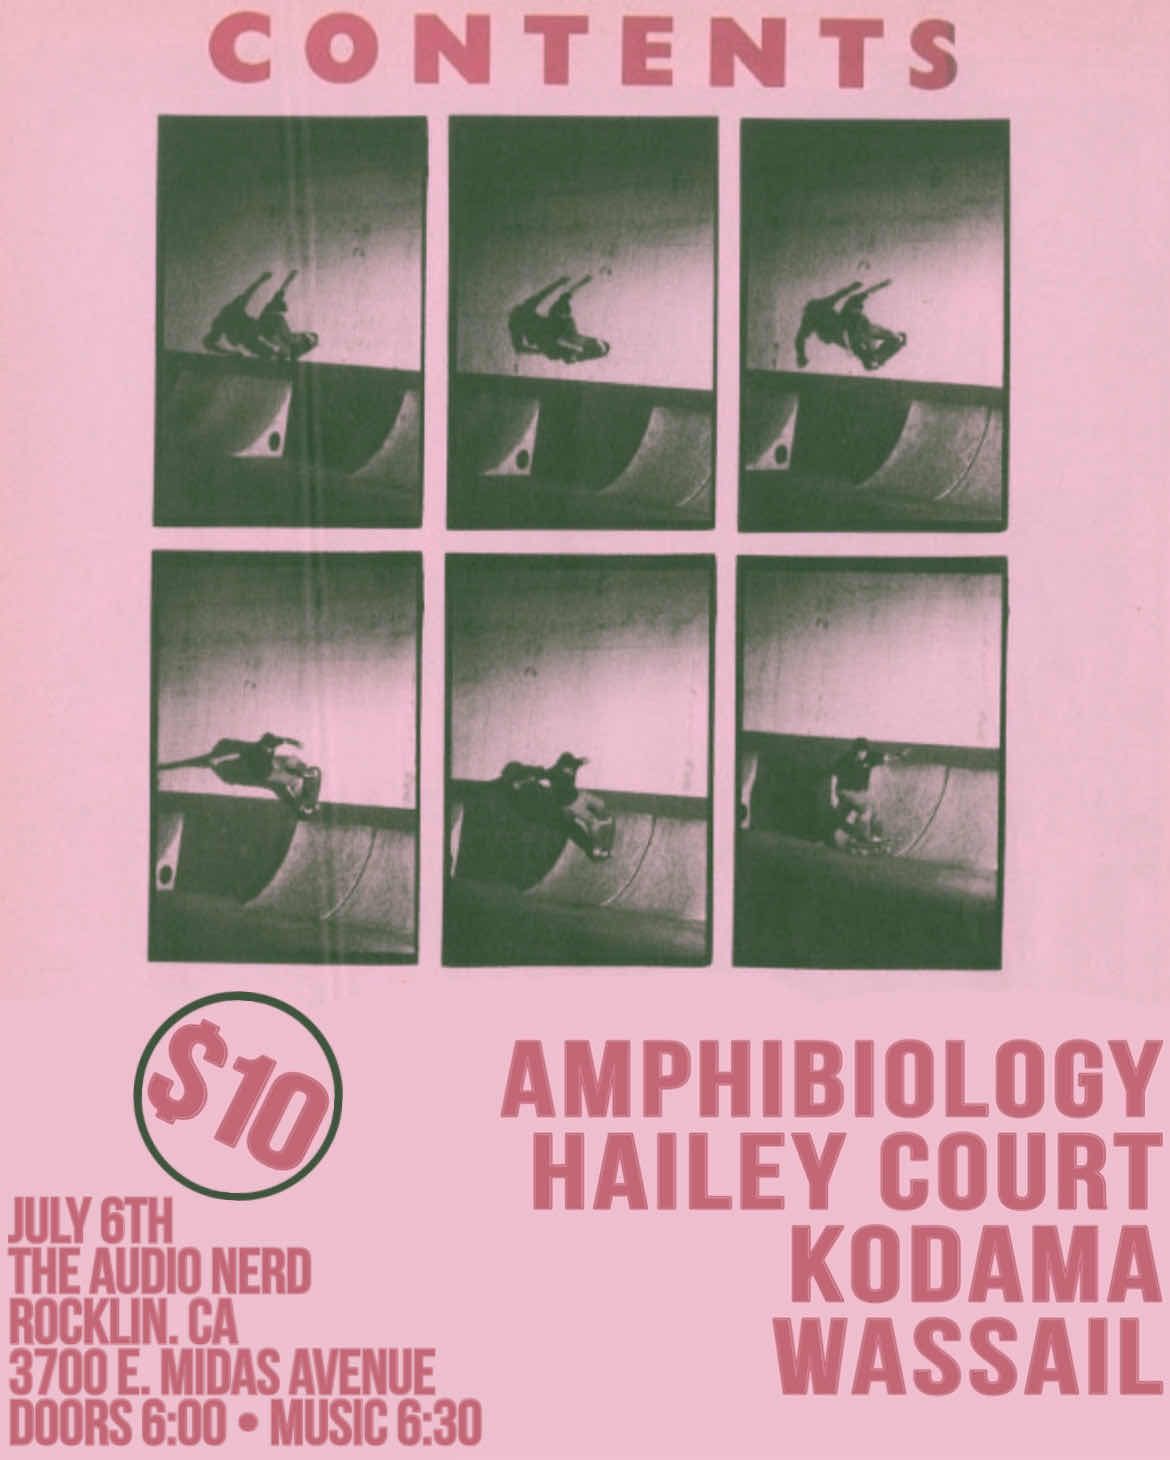 Amphibiology, Hailey Court, Kodama and Wassail Live at The Audio Nerd